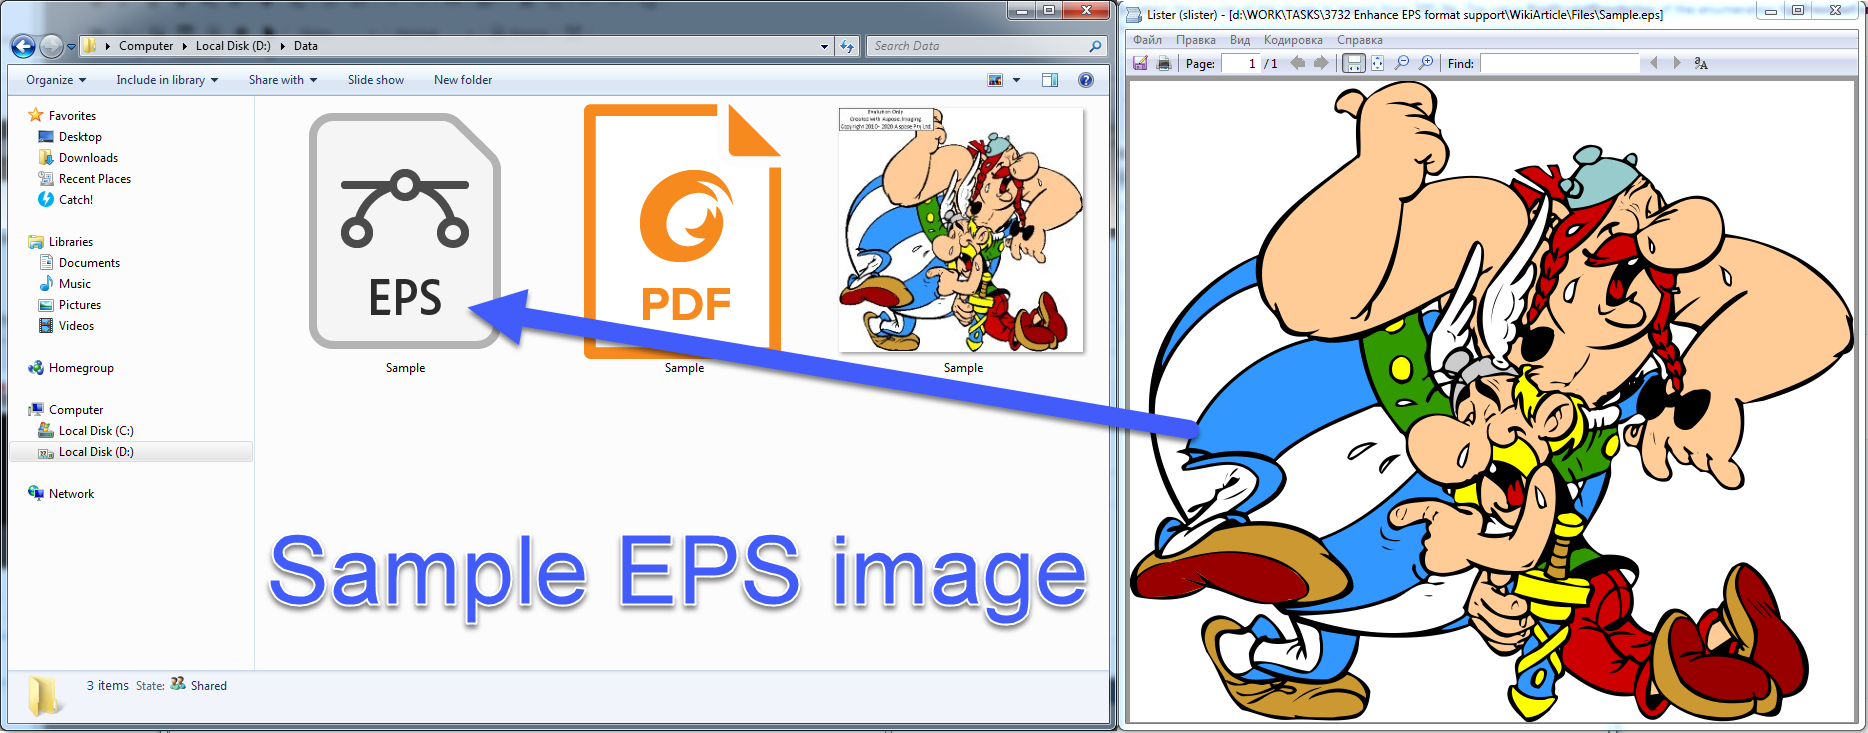 EPS sample image